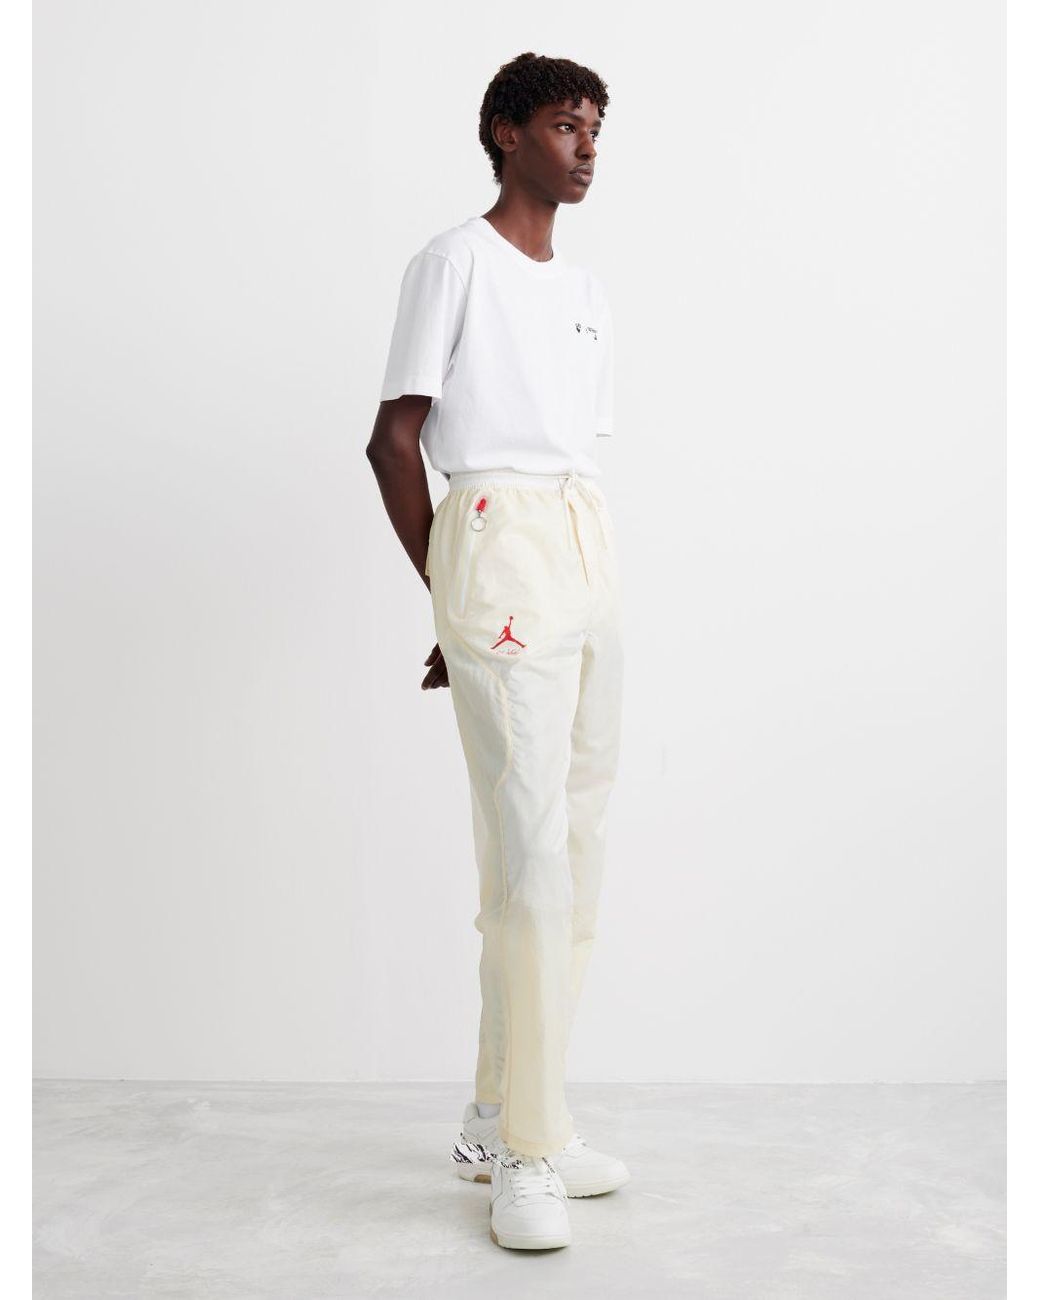 Mod viljen Stat fattige NIKE X OFF-WHITE Synthetic Jordan Brand X Off-whitetm️ Pants for Men - Lyst